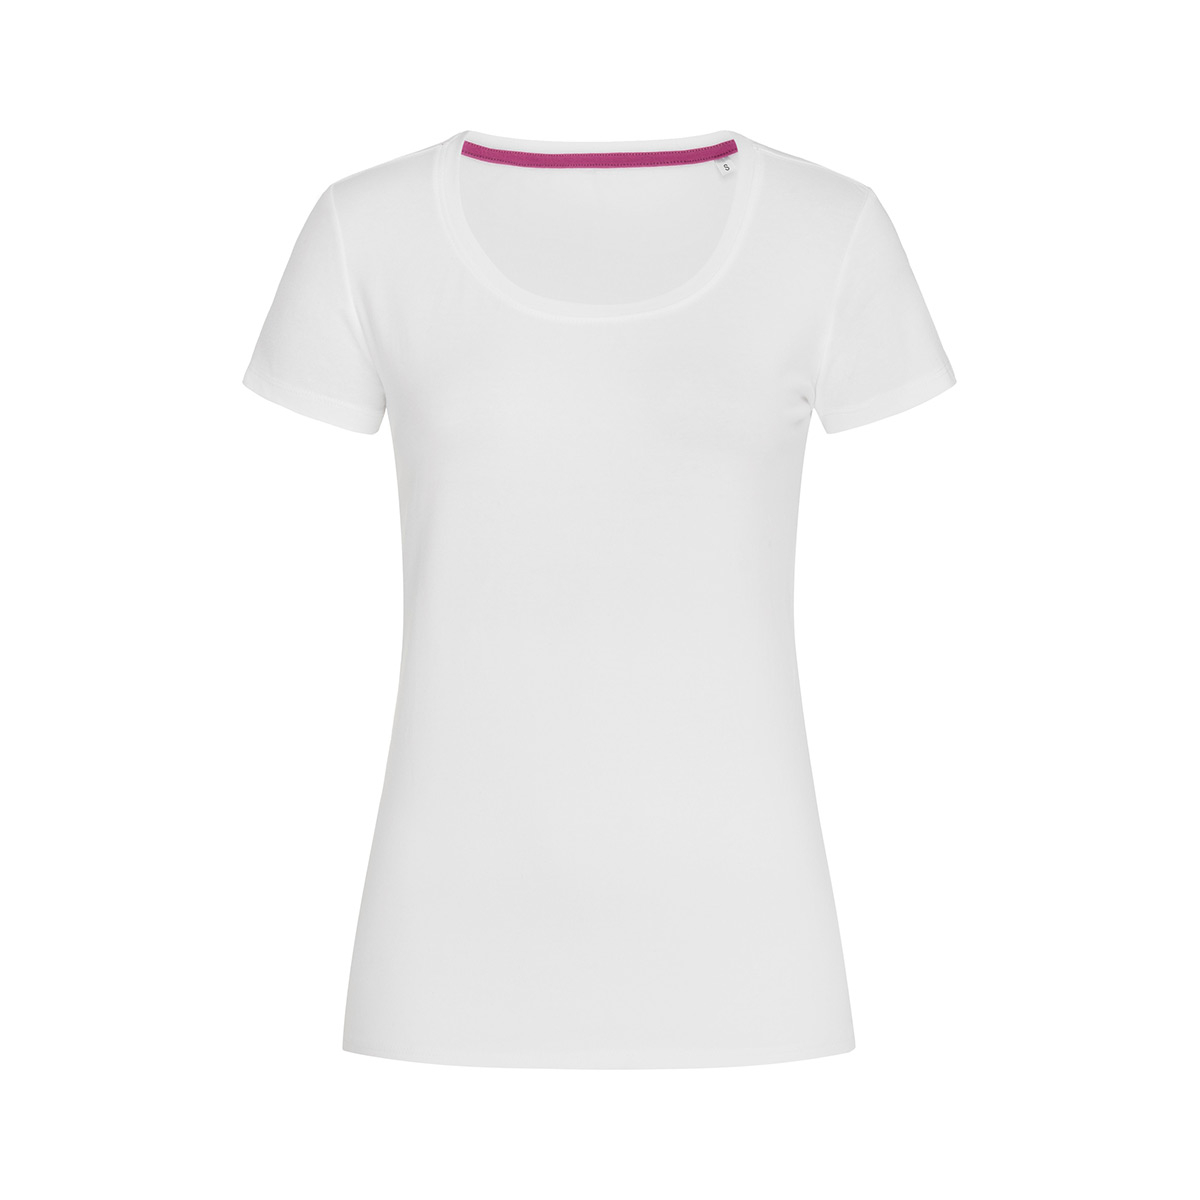 Dámské tričko Stedman Claire Crew Neck - bílé, XL